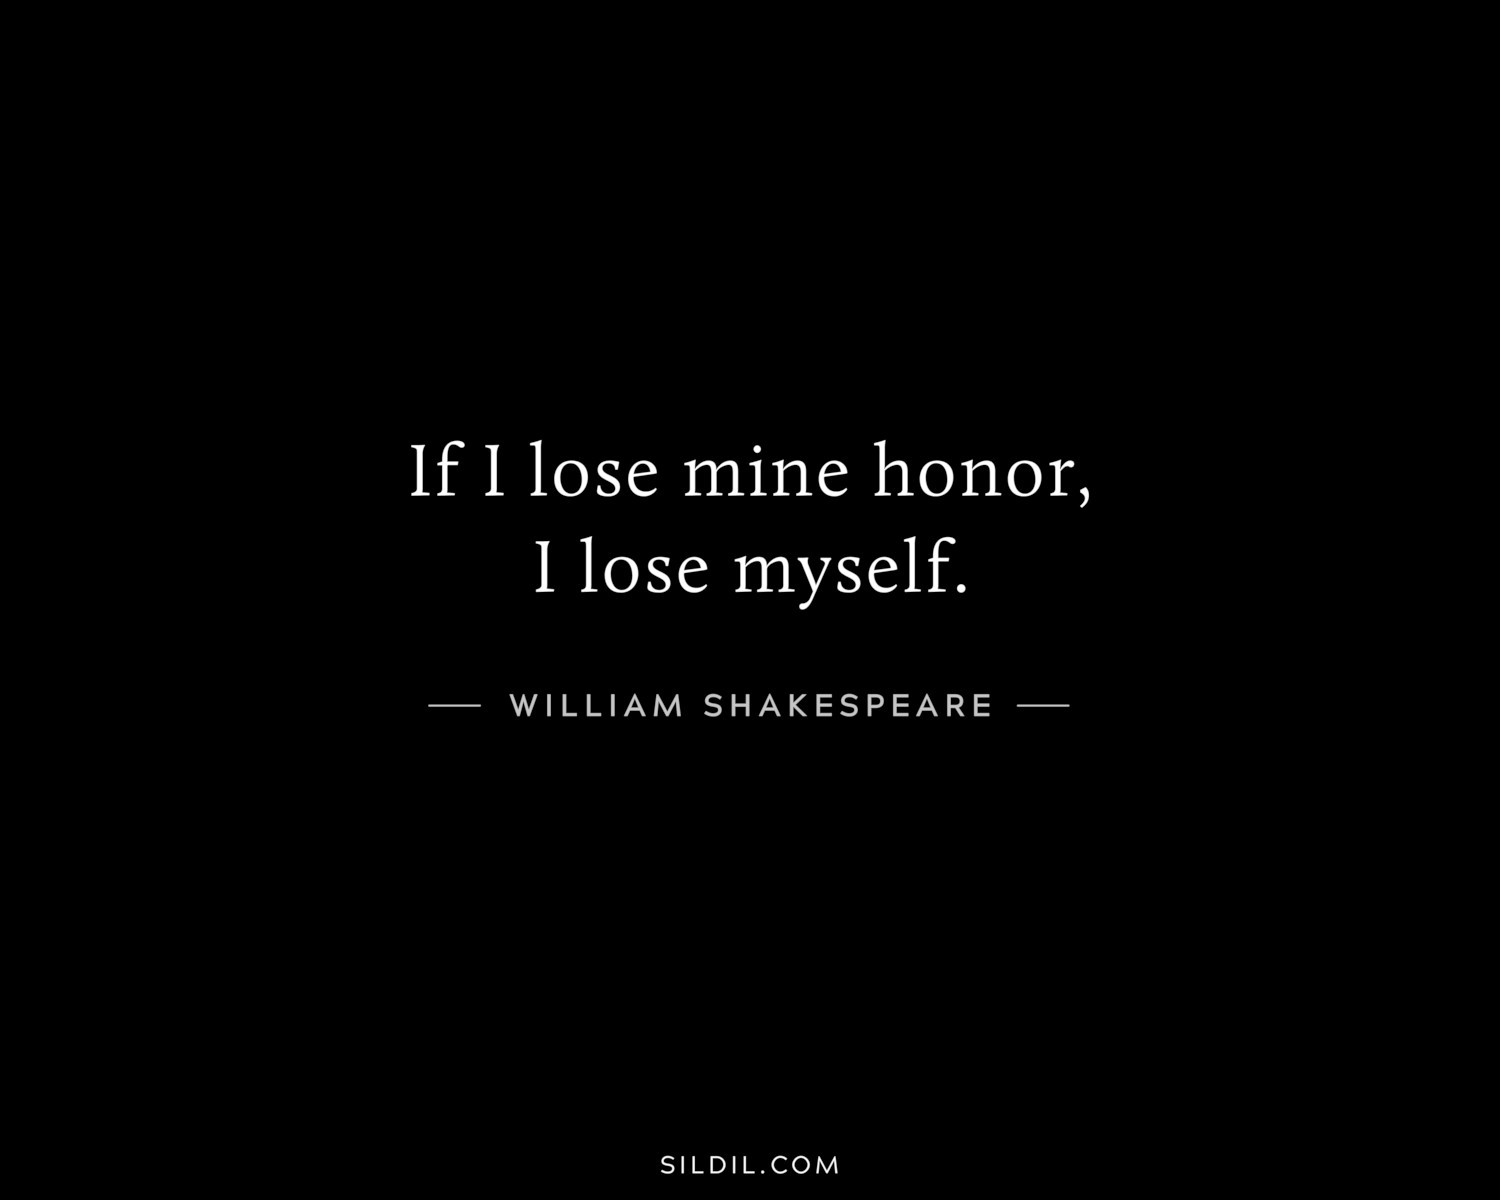 If I lose mine honor, I lose myself.